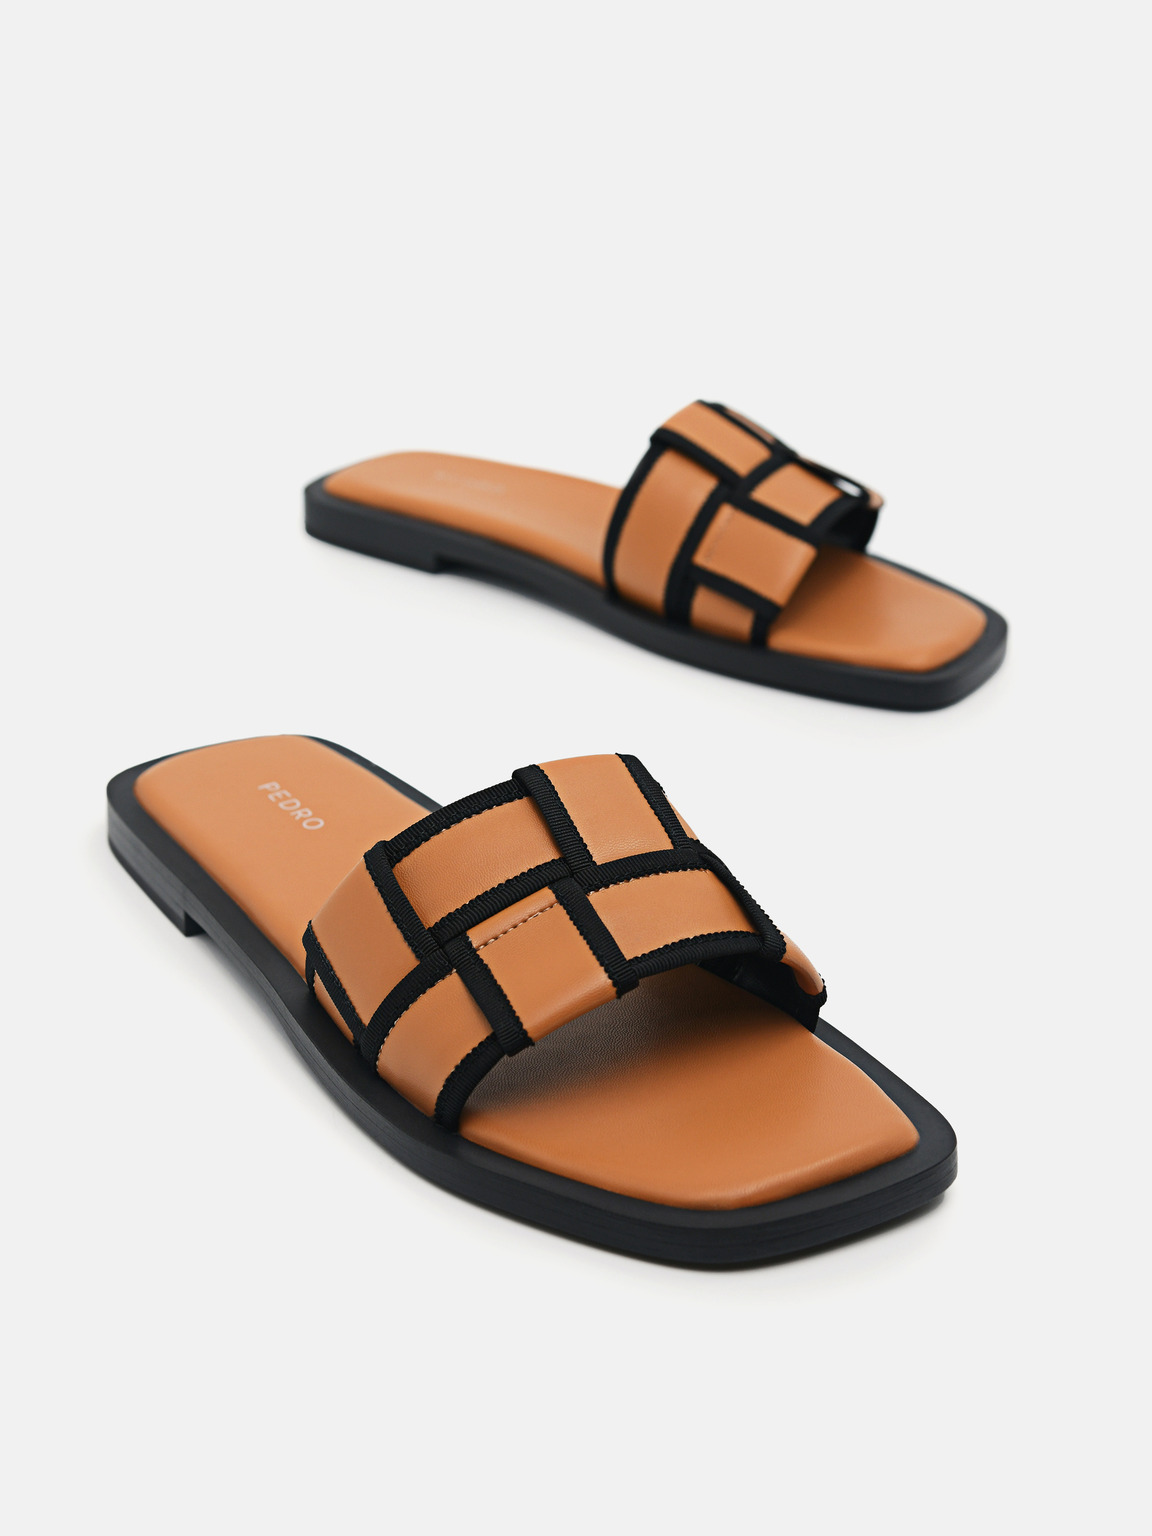 Woven Sandals, Camel